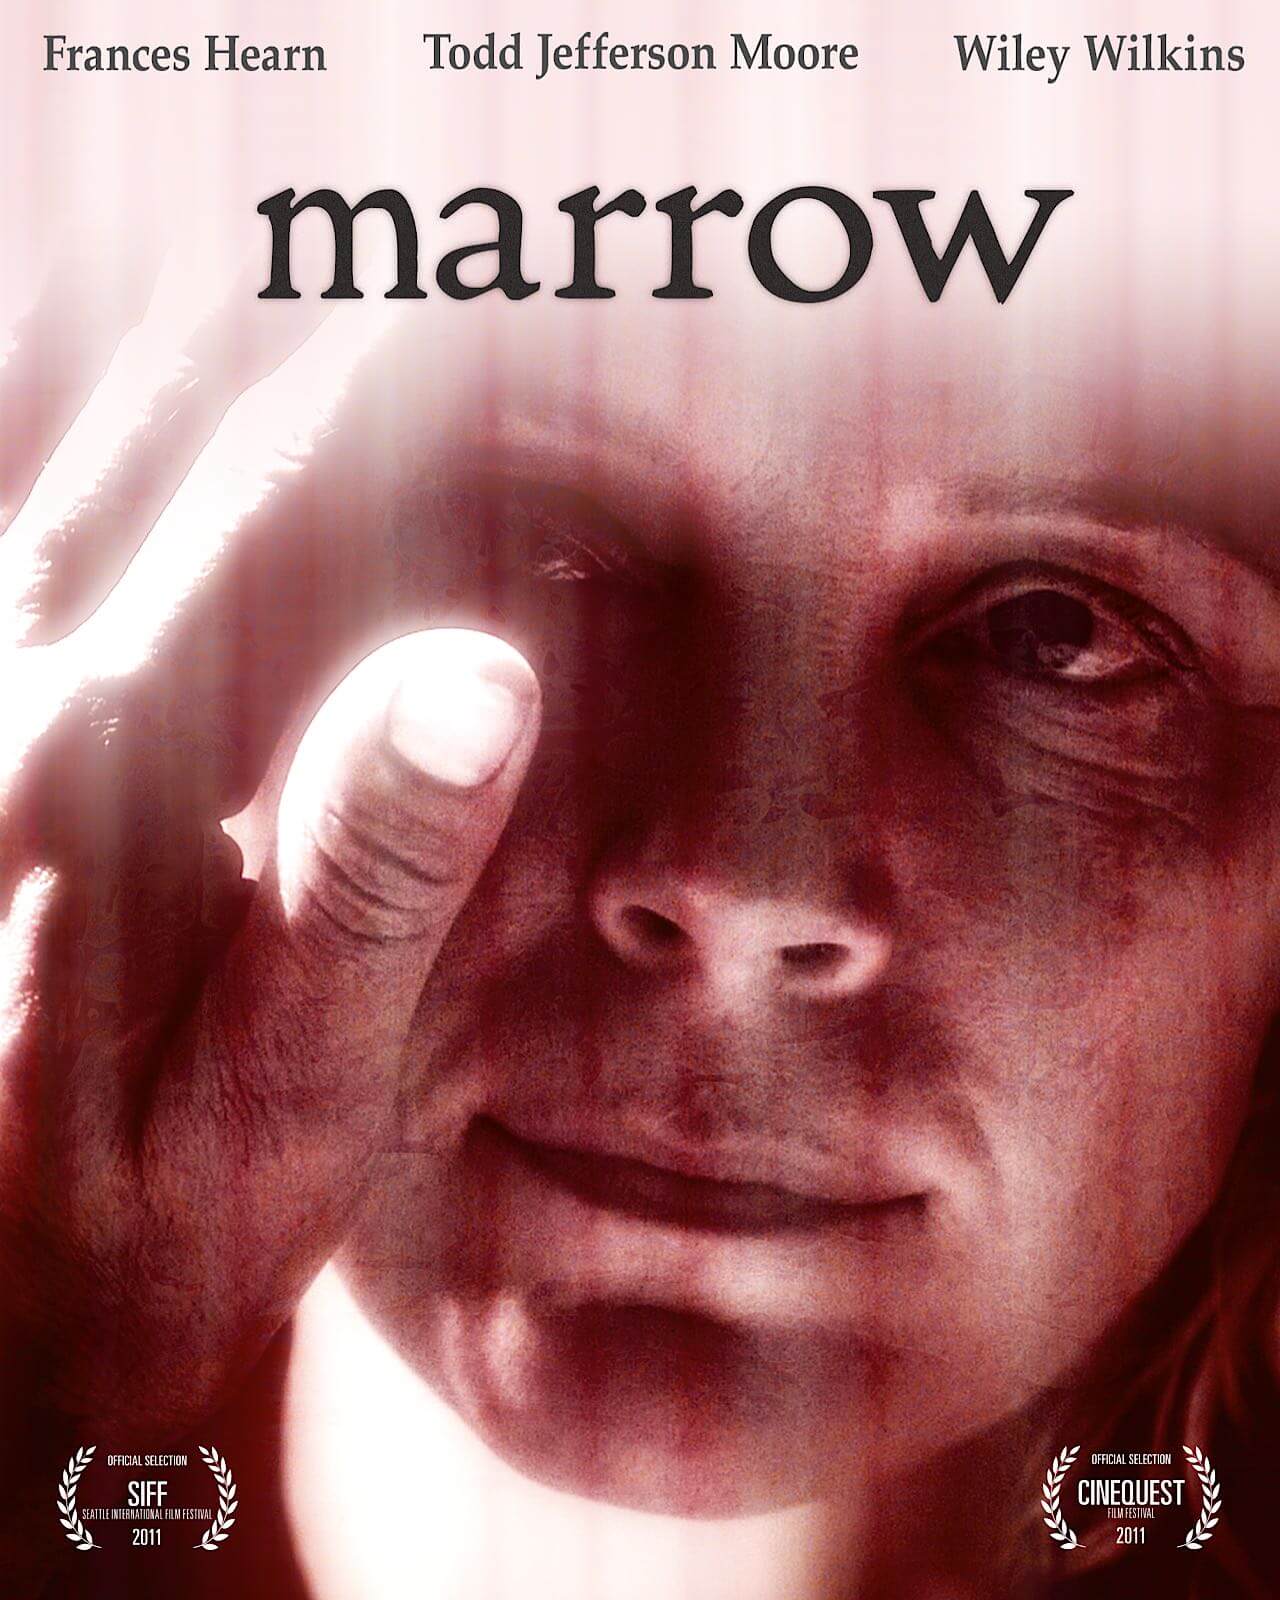 Marrow Francis poster design